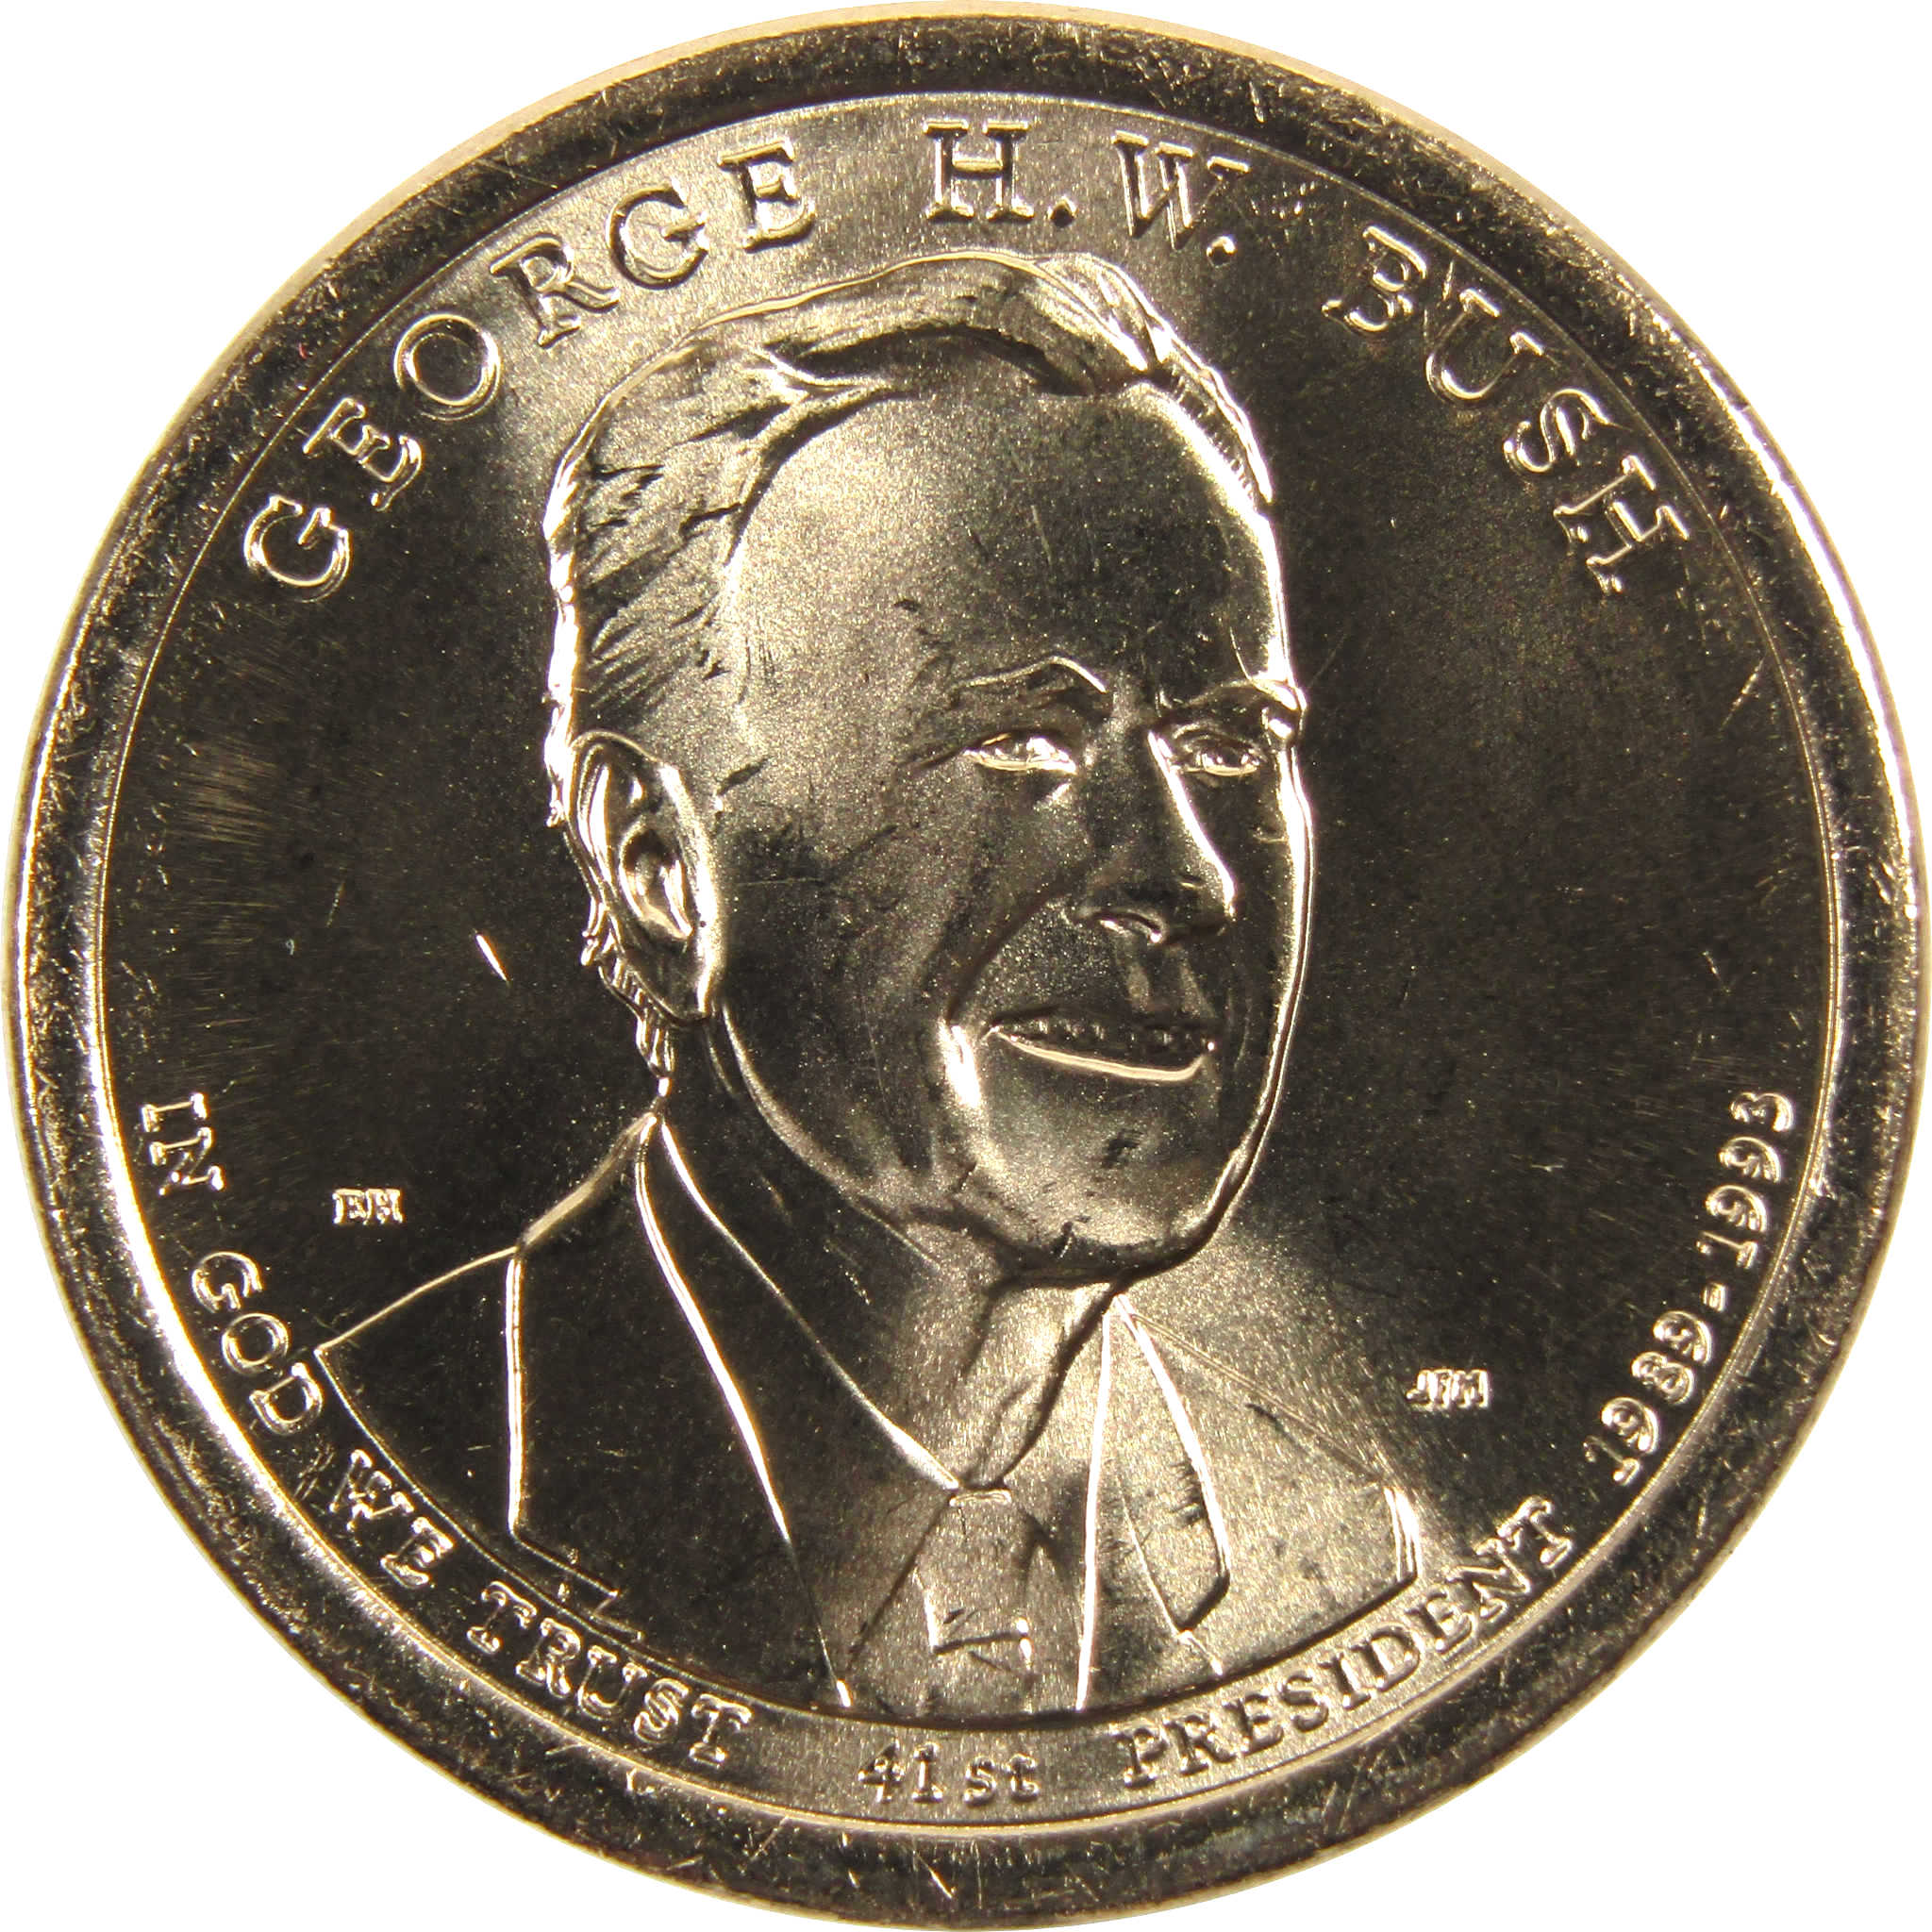 2020 D George H W Bush Presidential Dollar BU Uncirculated $1 Coin